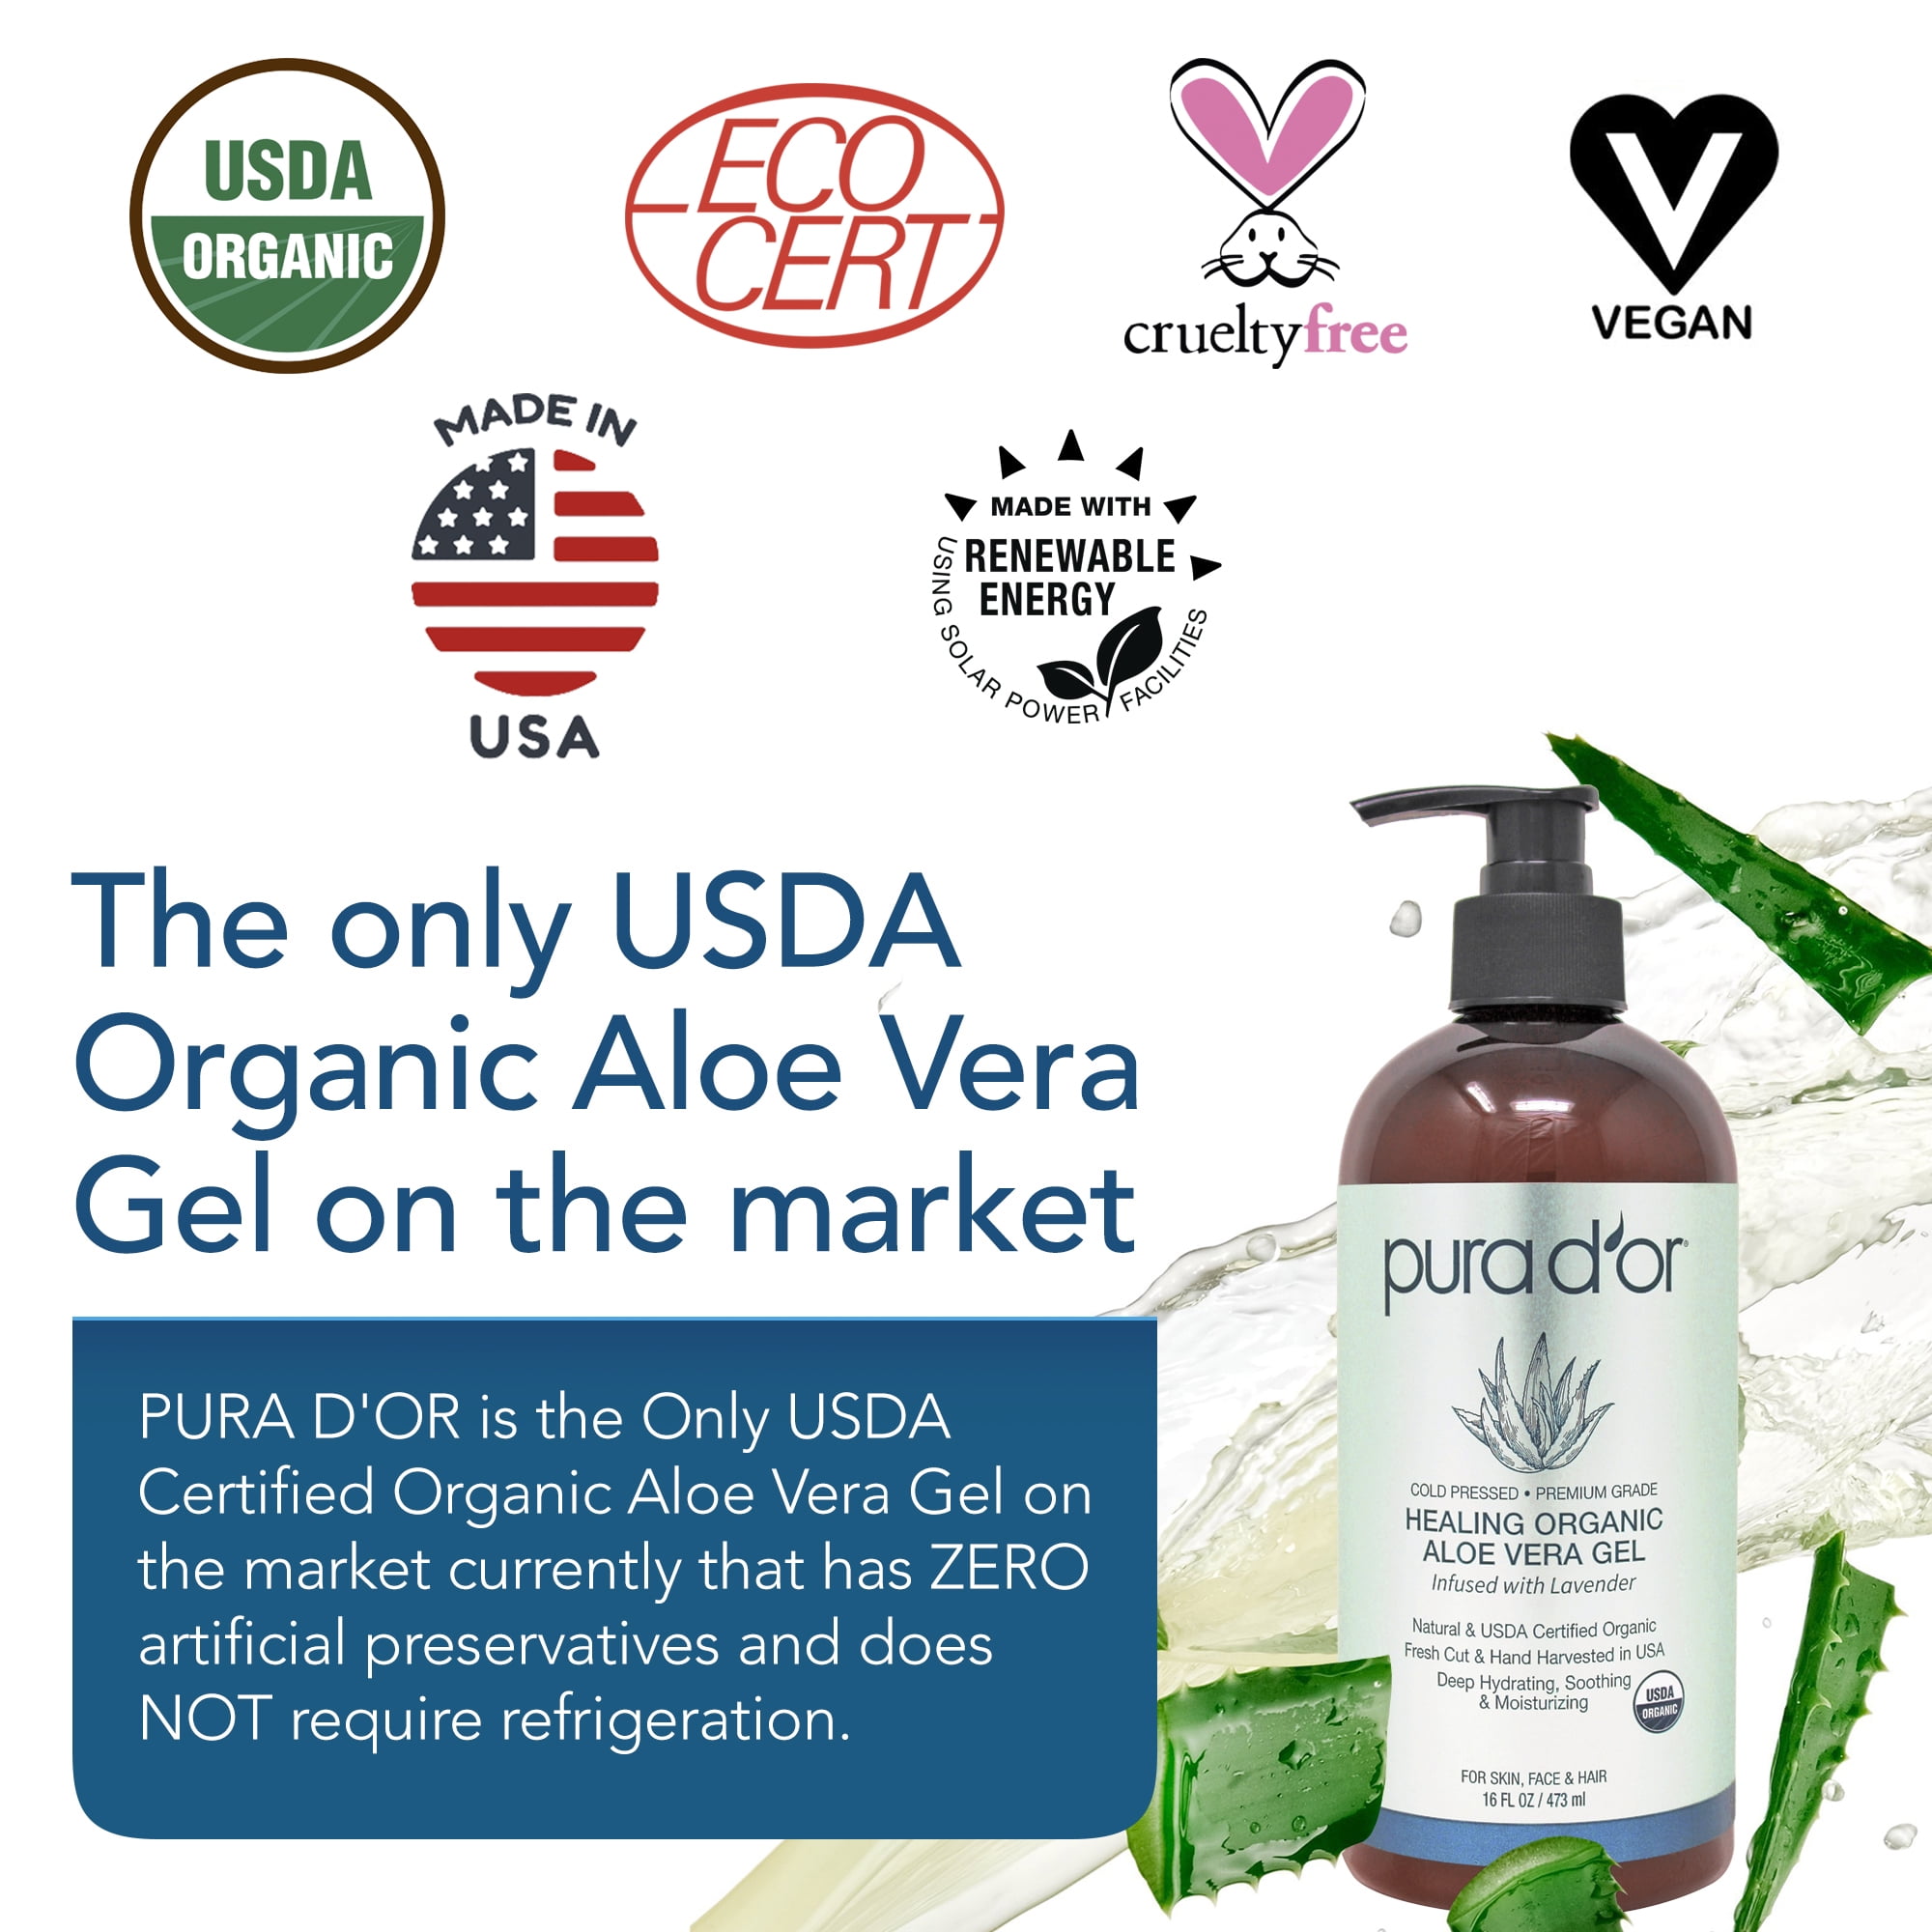 PURA D'OR Organic Aloe Vera Gel Lavender (16oz) All Natural - ZERO Artificial Preservatives - Deeply Hydrating & Moisturizing Sunburn, Bug Bites, Rashes, Small Cuts, Eczema Relief - Skin